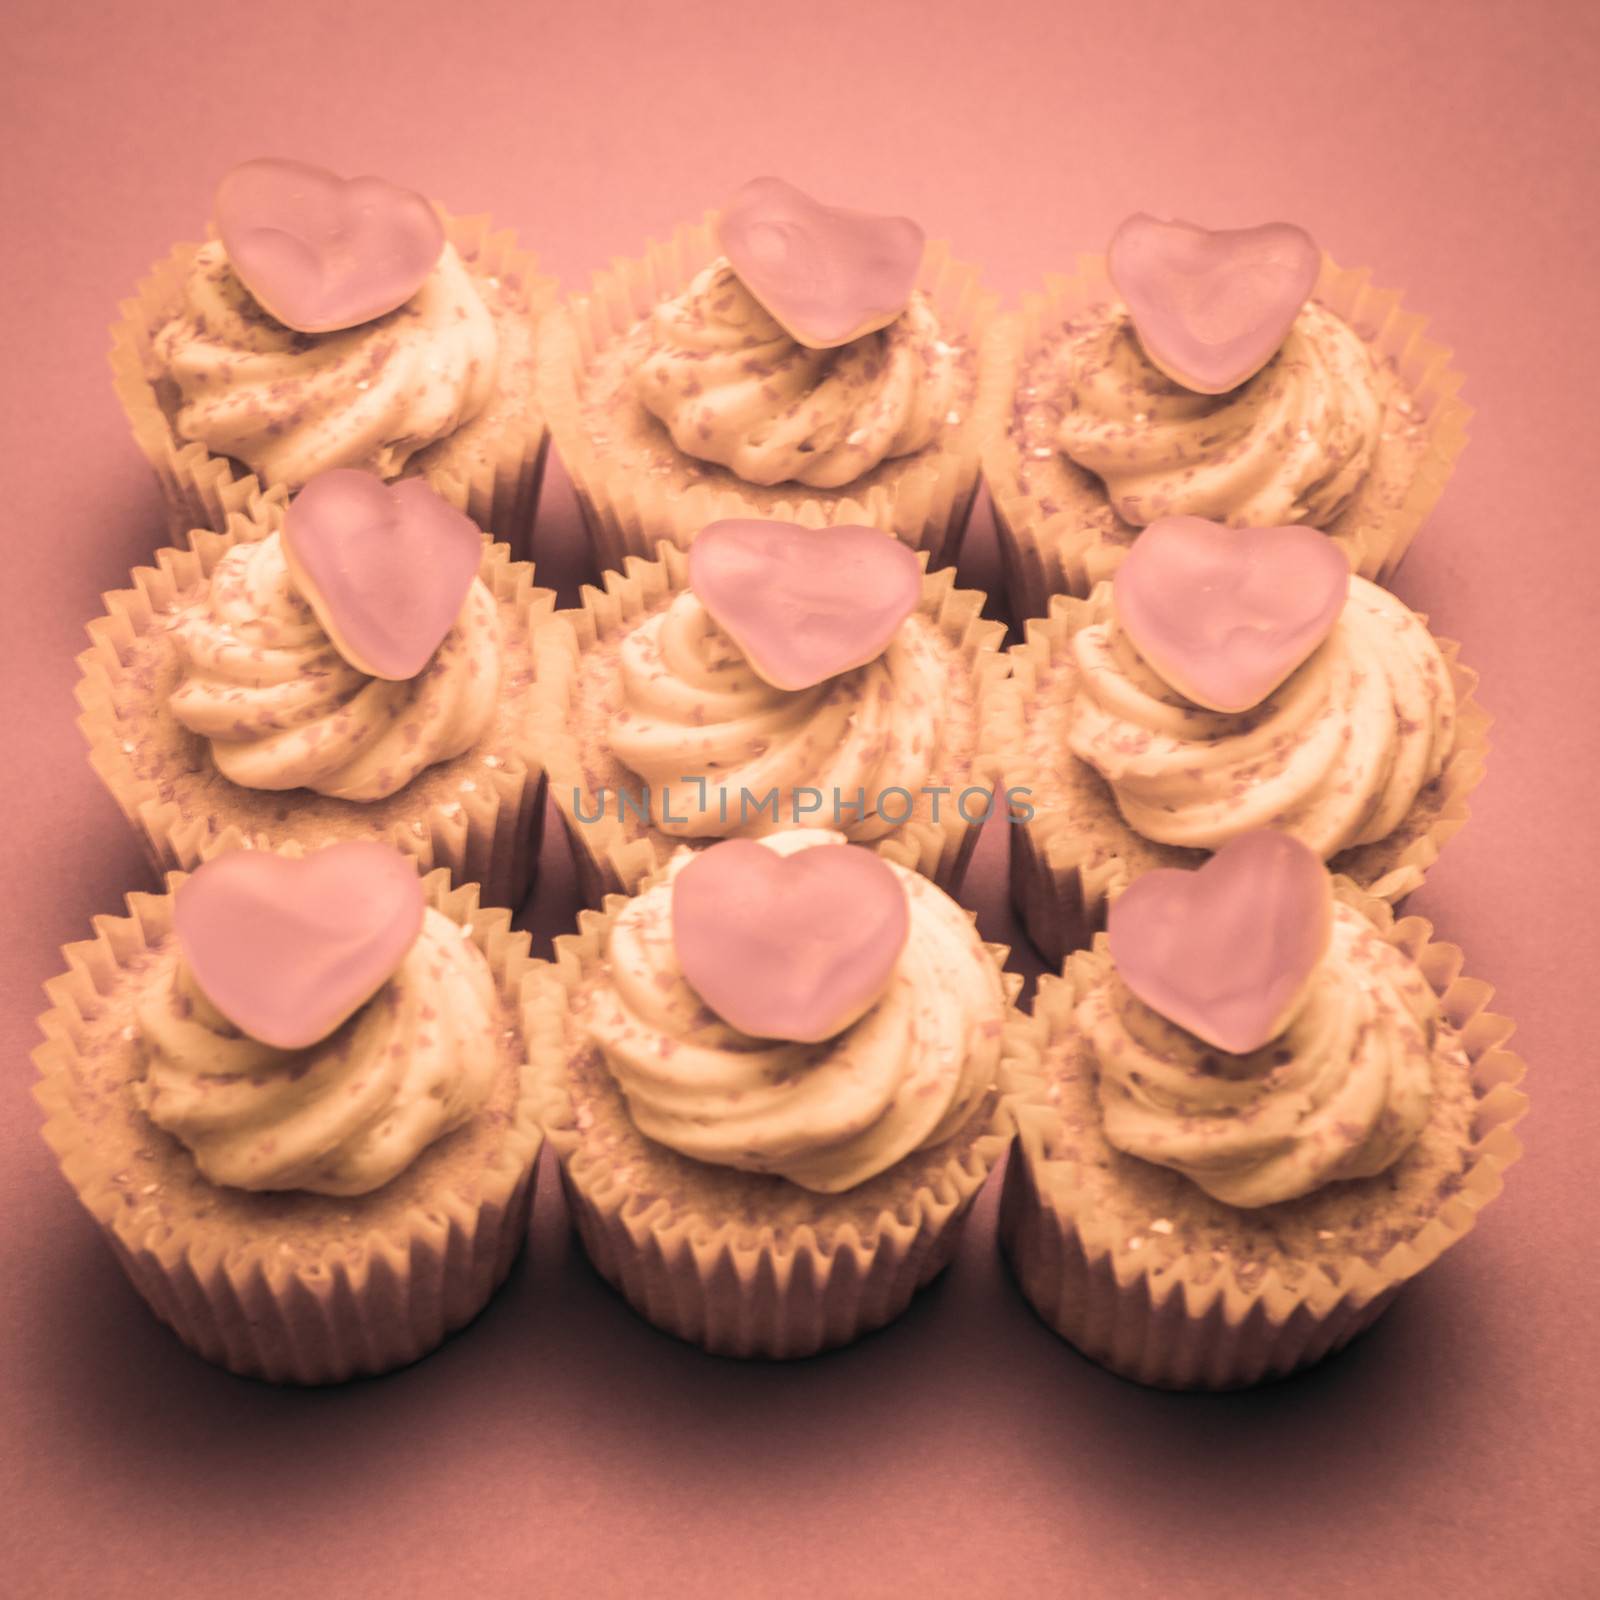 Valentines cupcakes by Wavebreakmedia